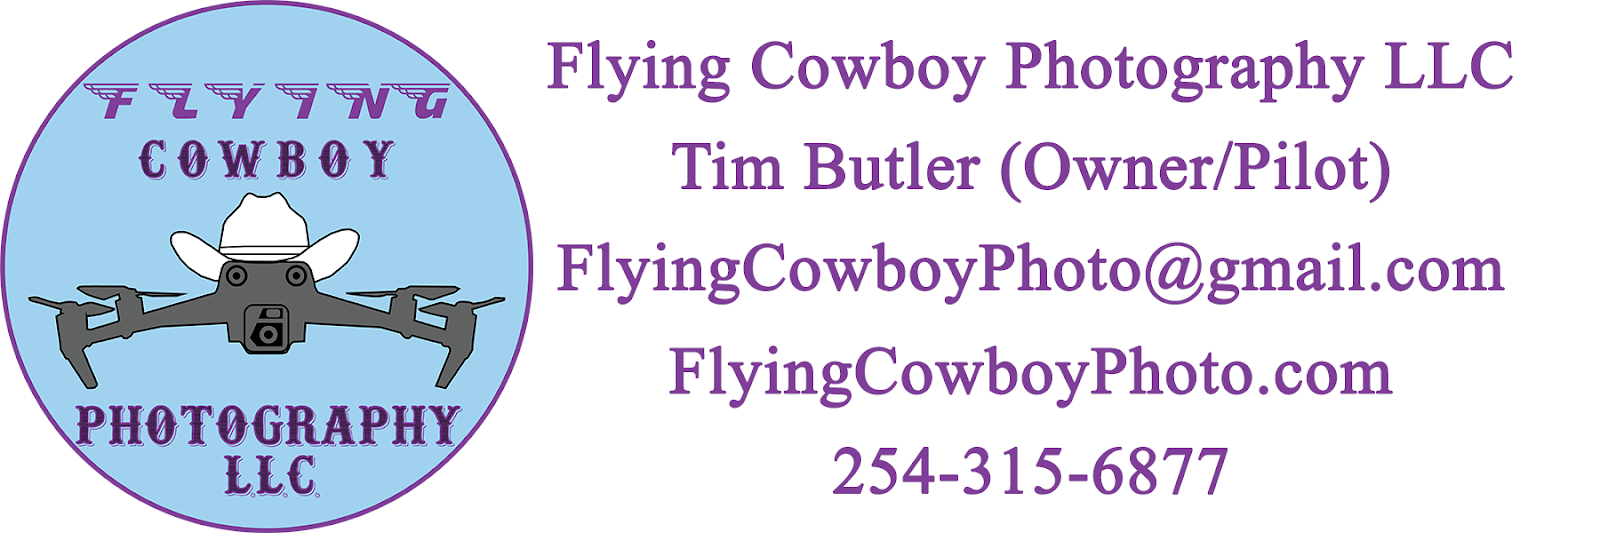 Flying Cowboy Photography LLC